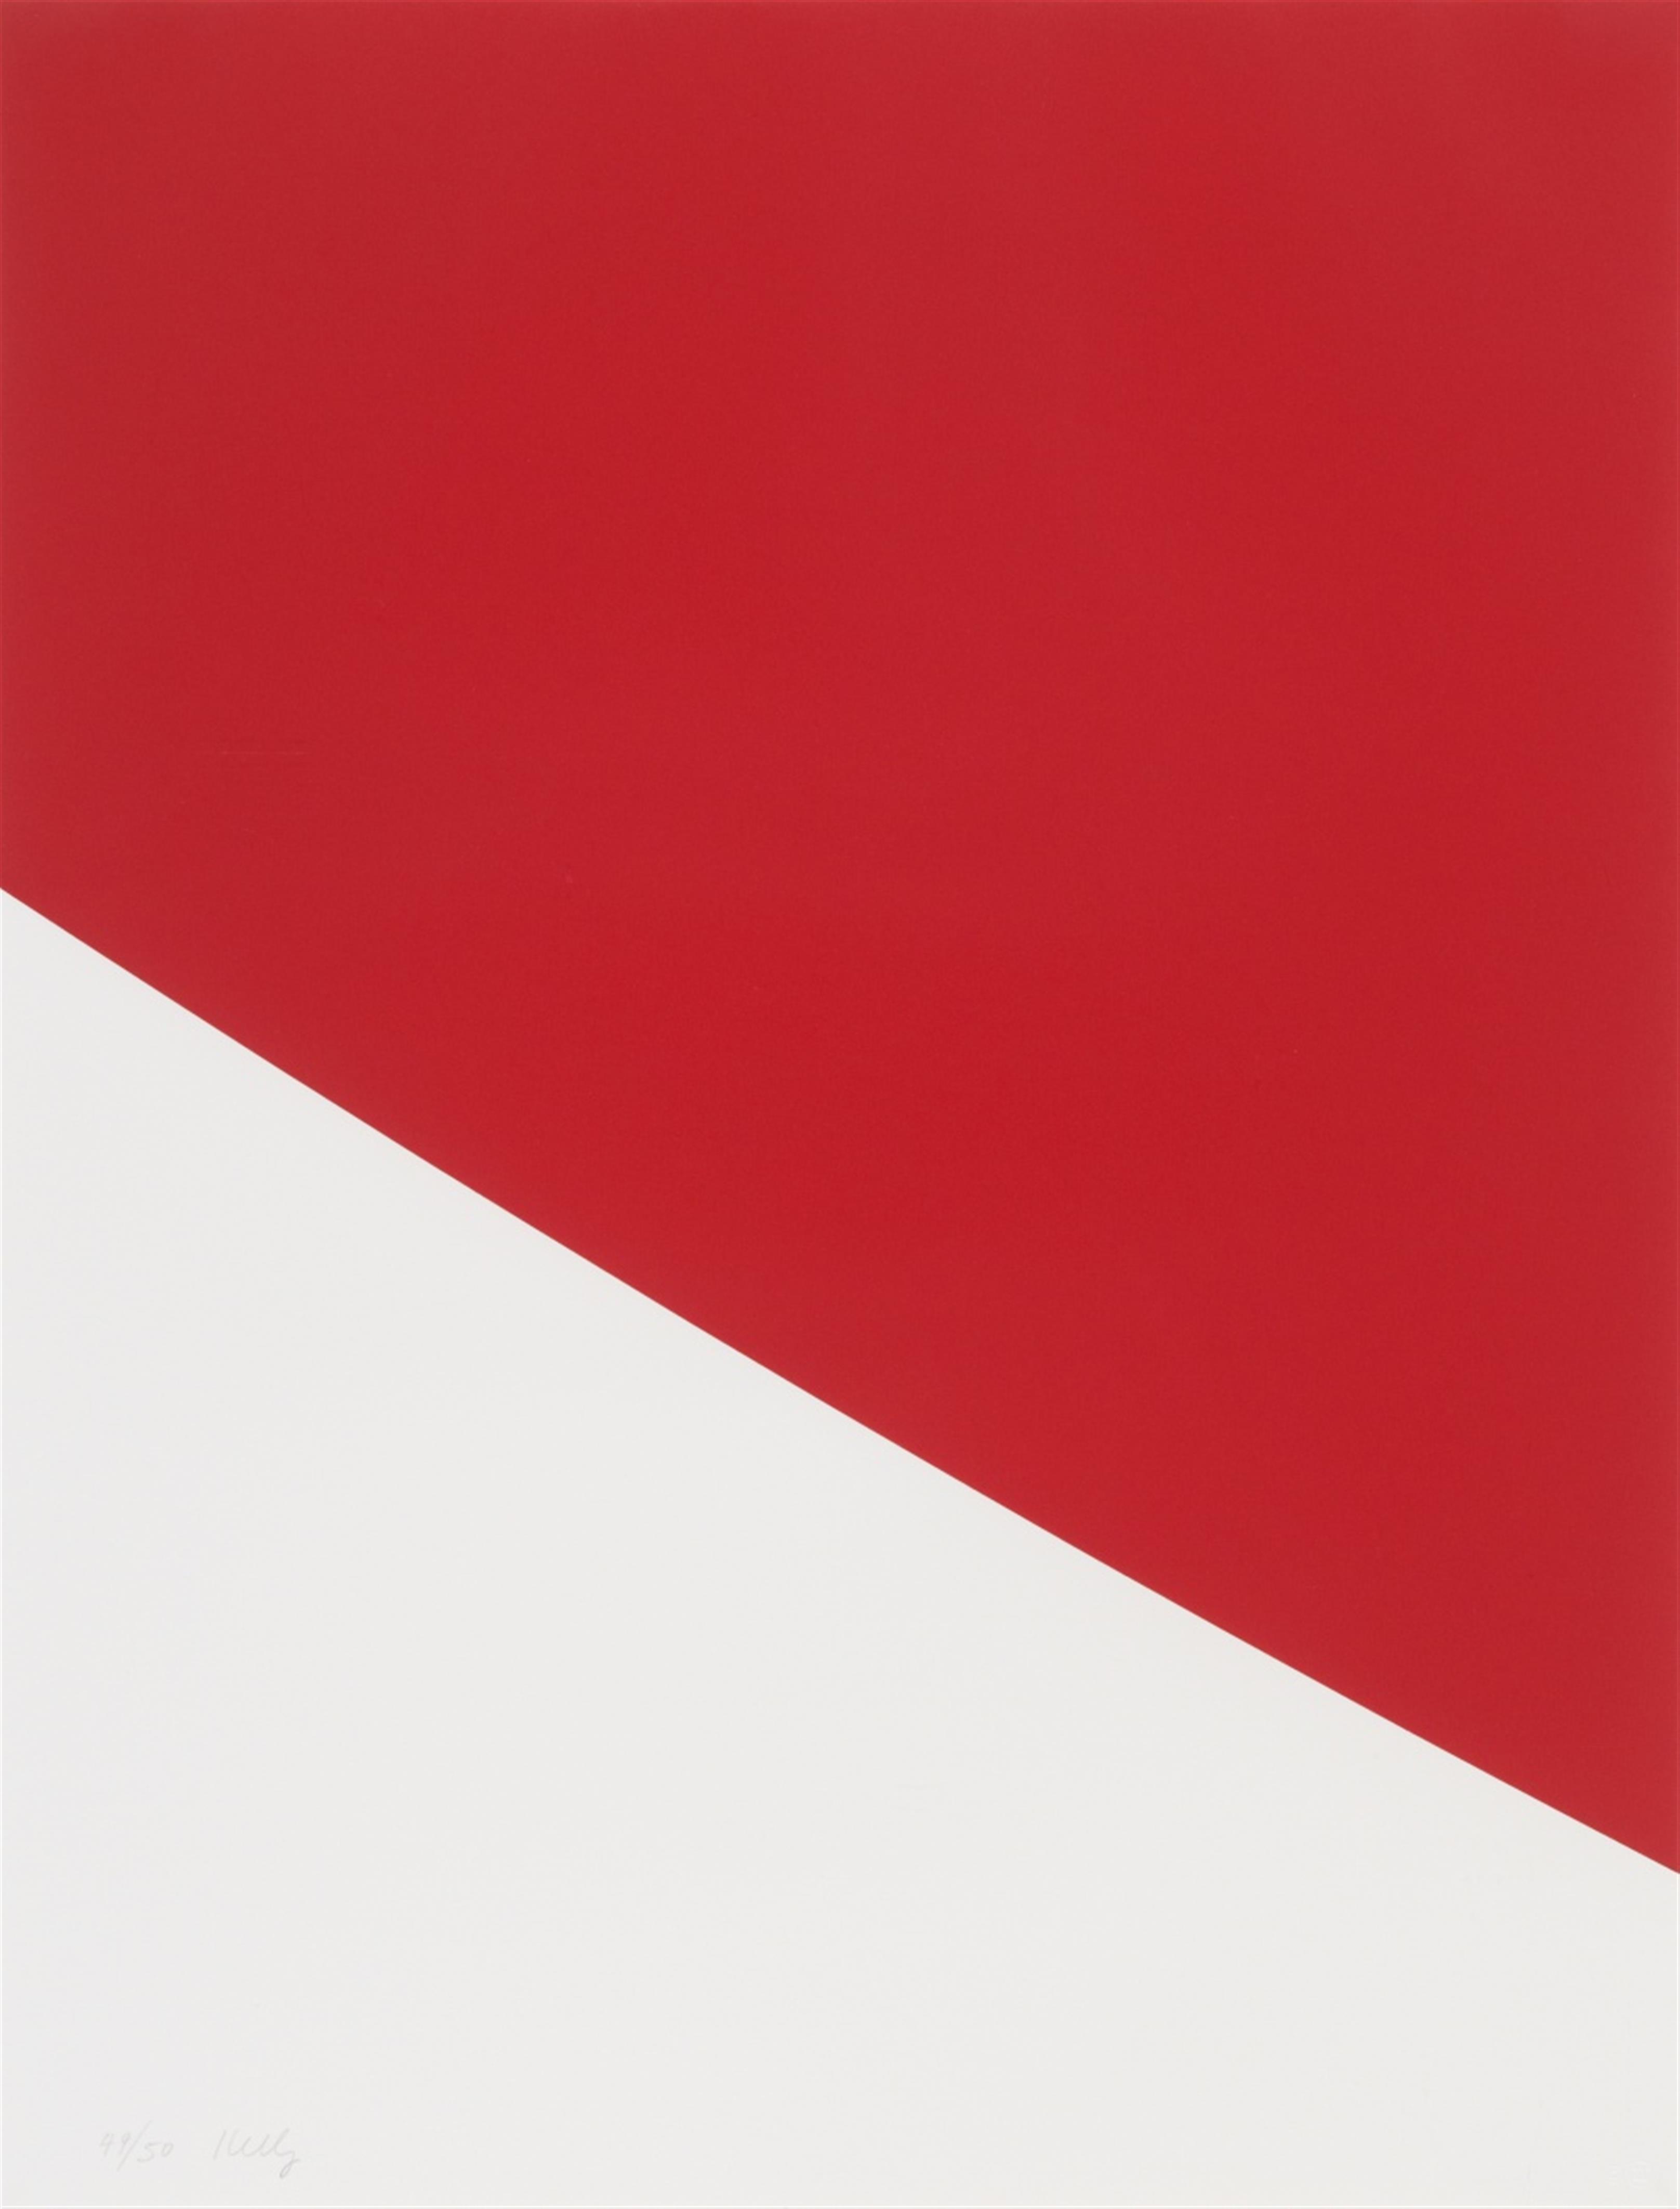 Ellsworth Kelly - Red Curve - image-1